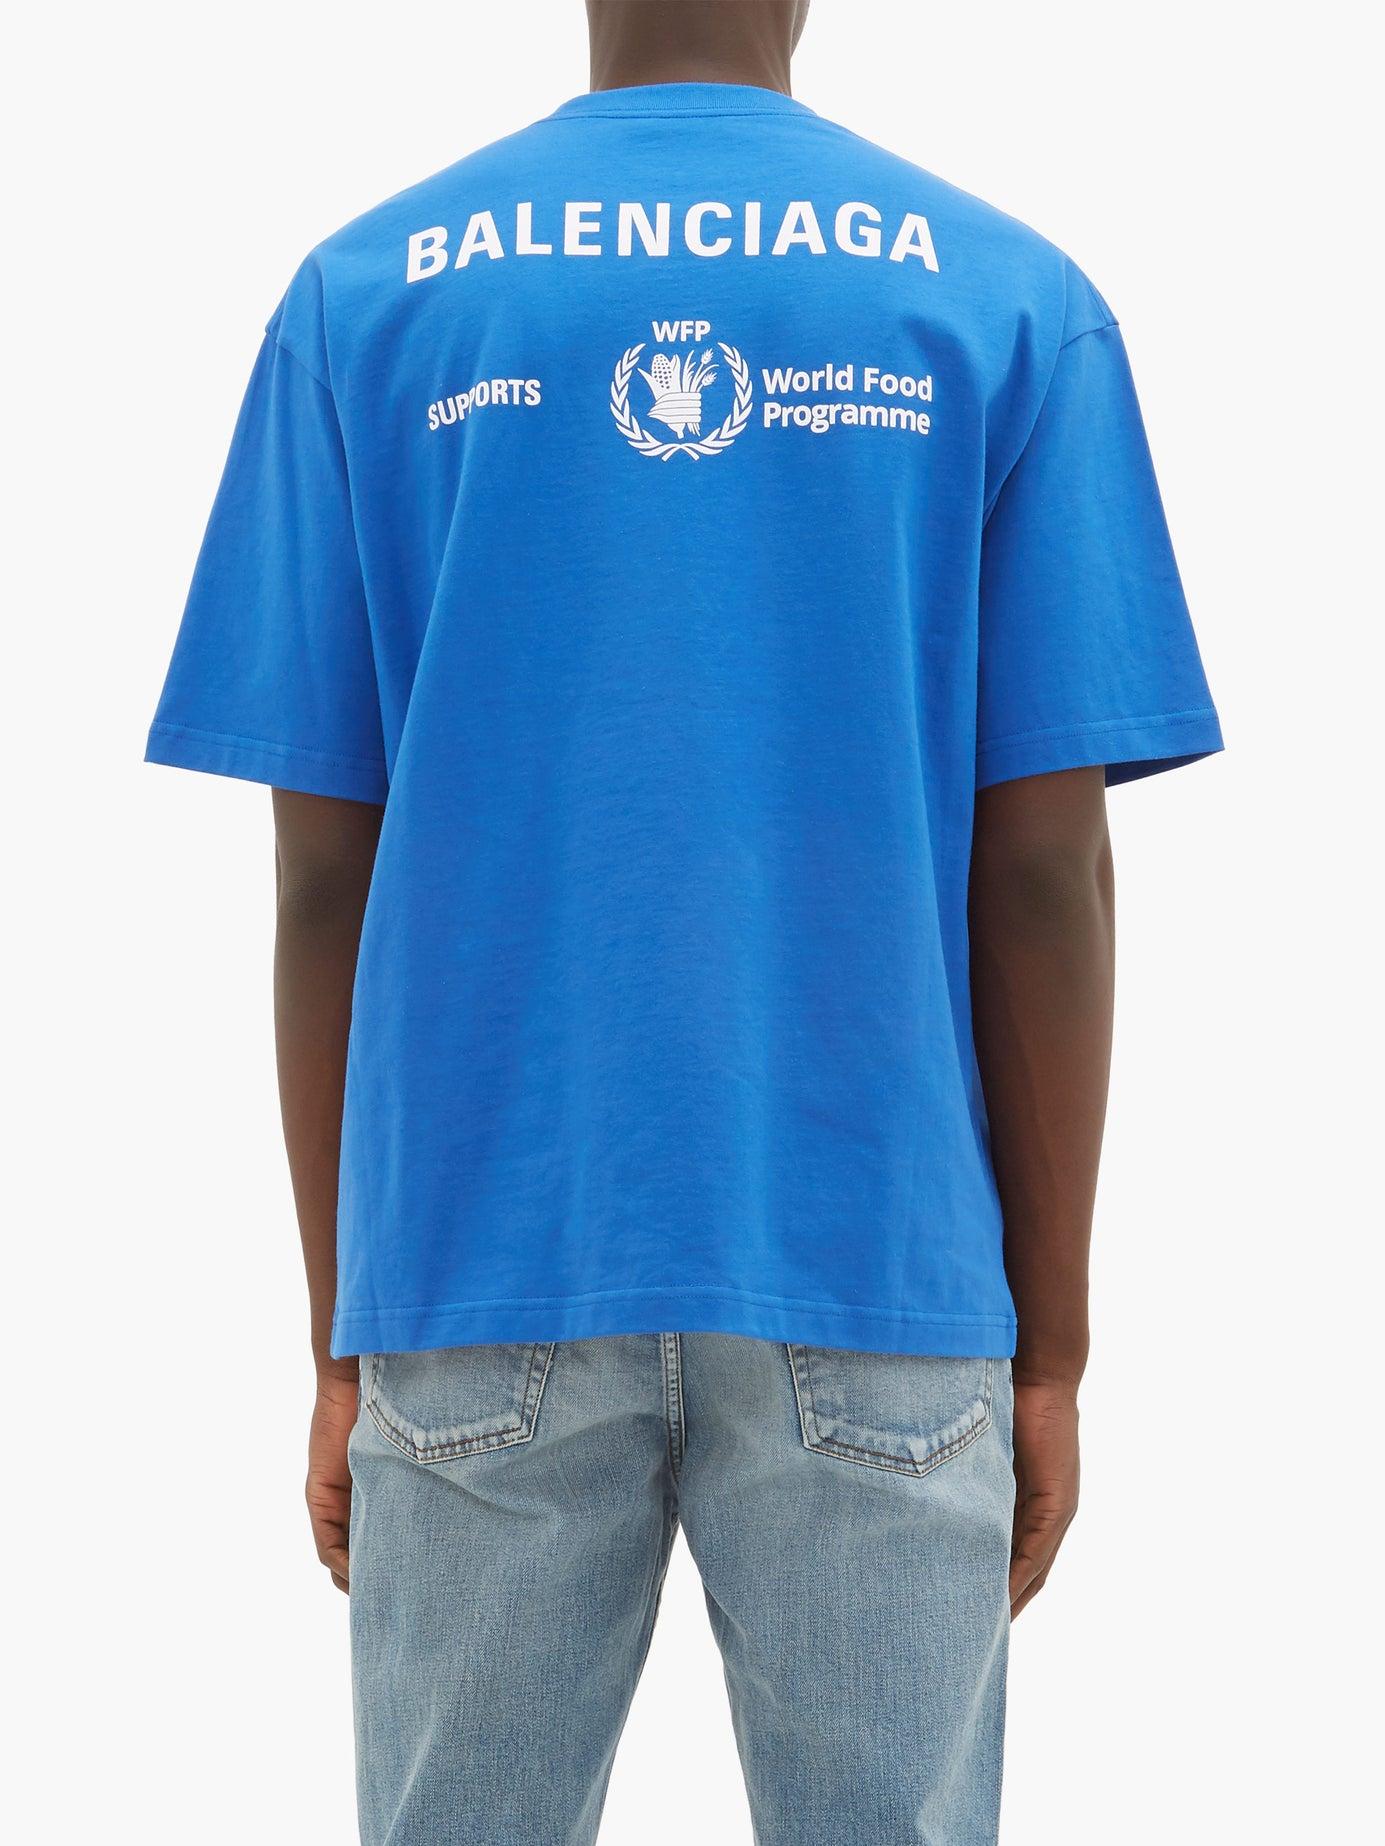 Balenciaga world food. Футболка Balenciaga мужская World food programme. Balenciaga WFP. Синяя футболка Баленсиага. Balenciaga be different t Shirt.